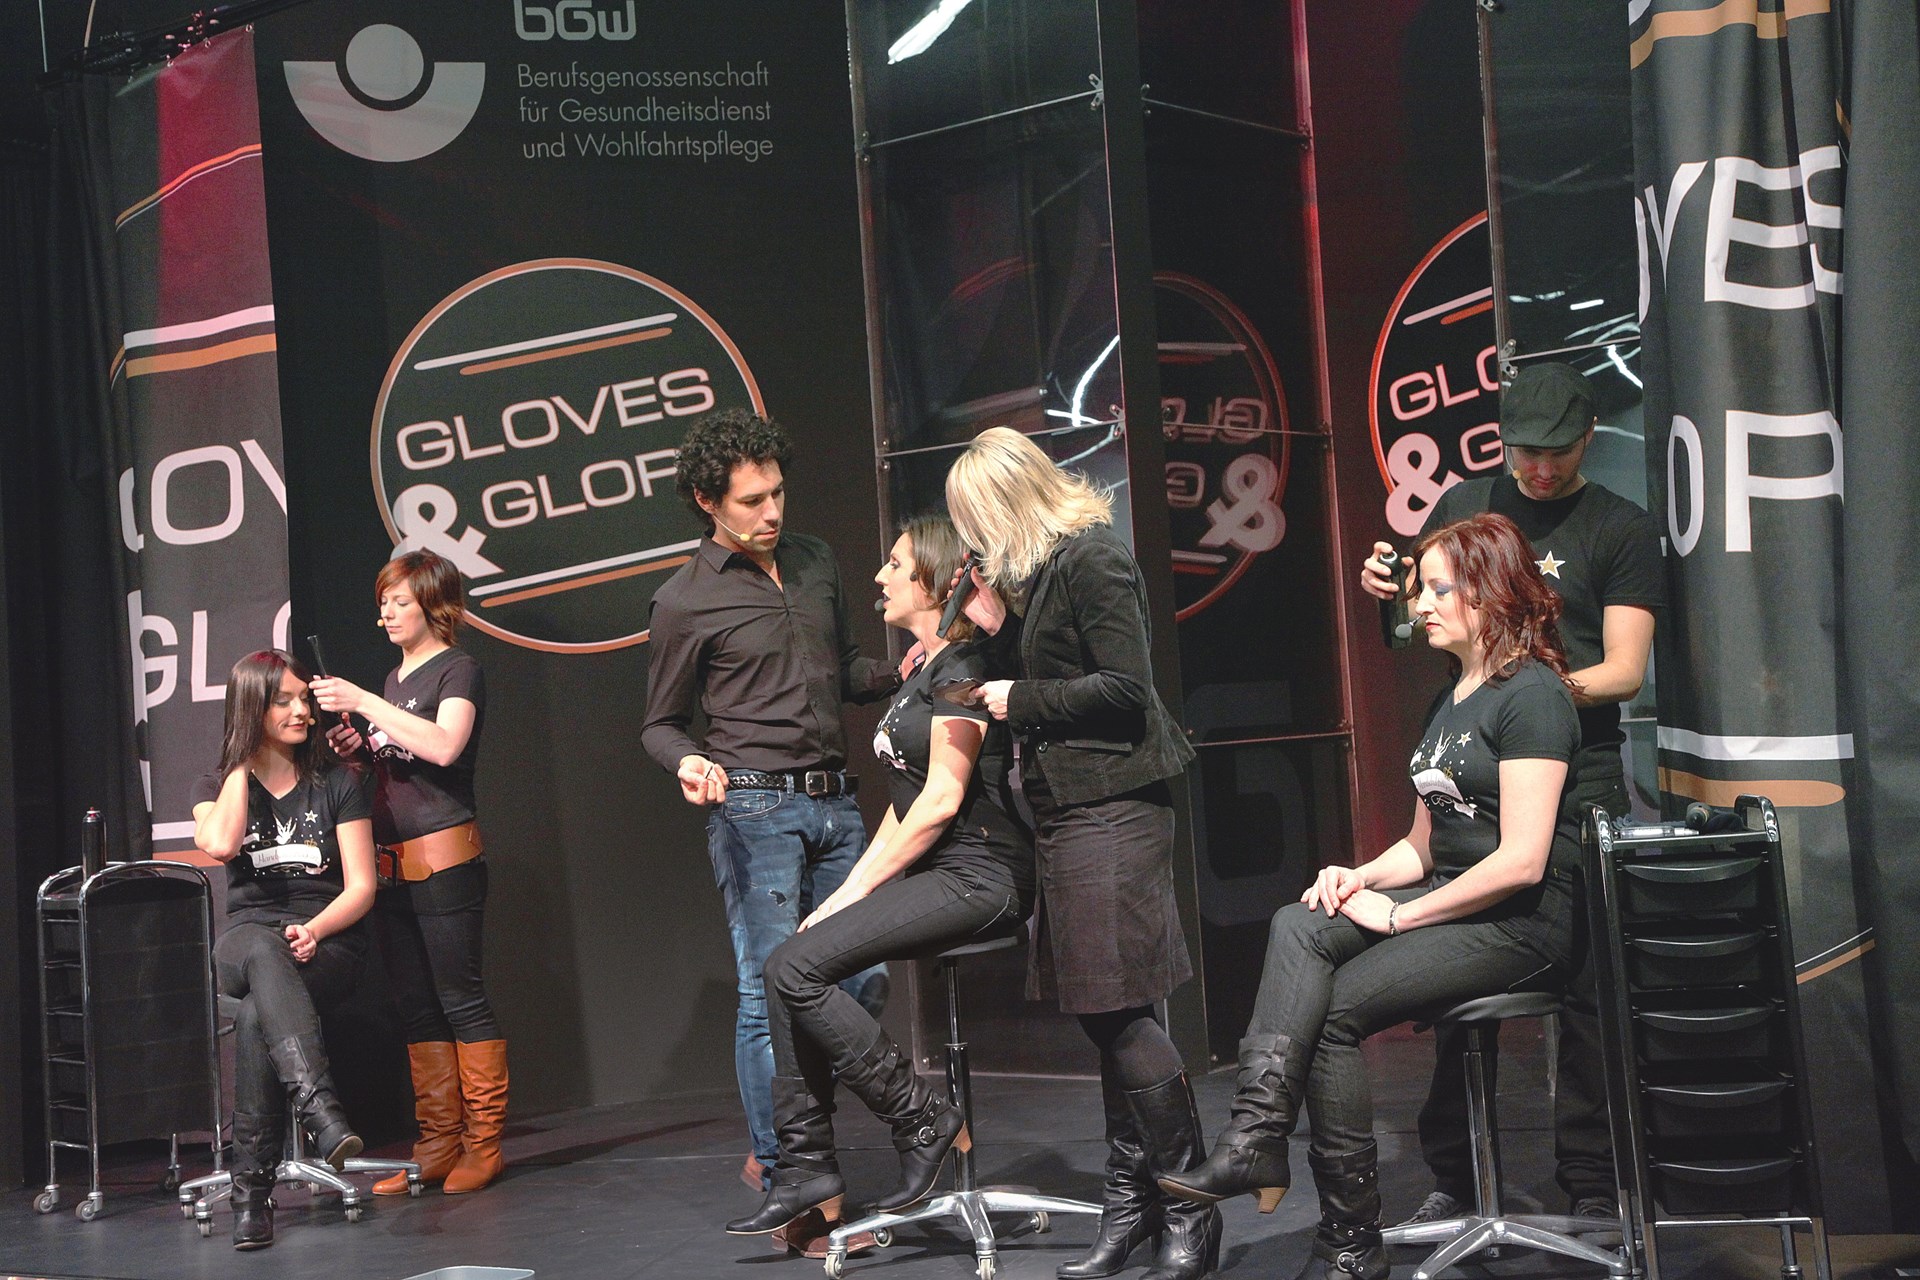 Bundesweite Roadshow für BGW Kampagne "Gloves & Glory"